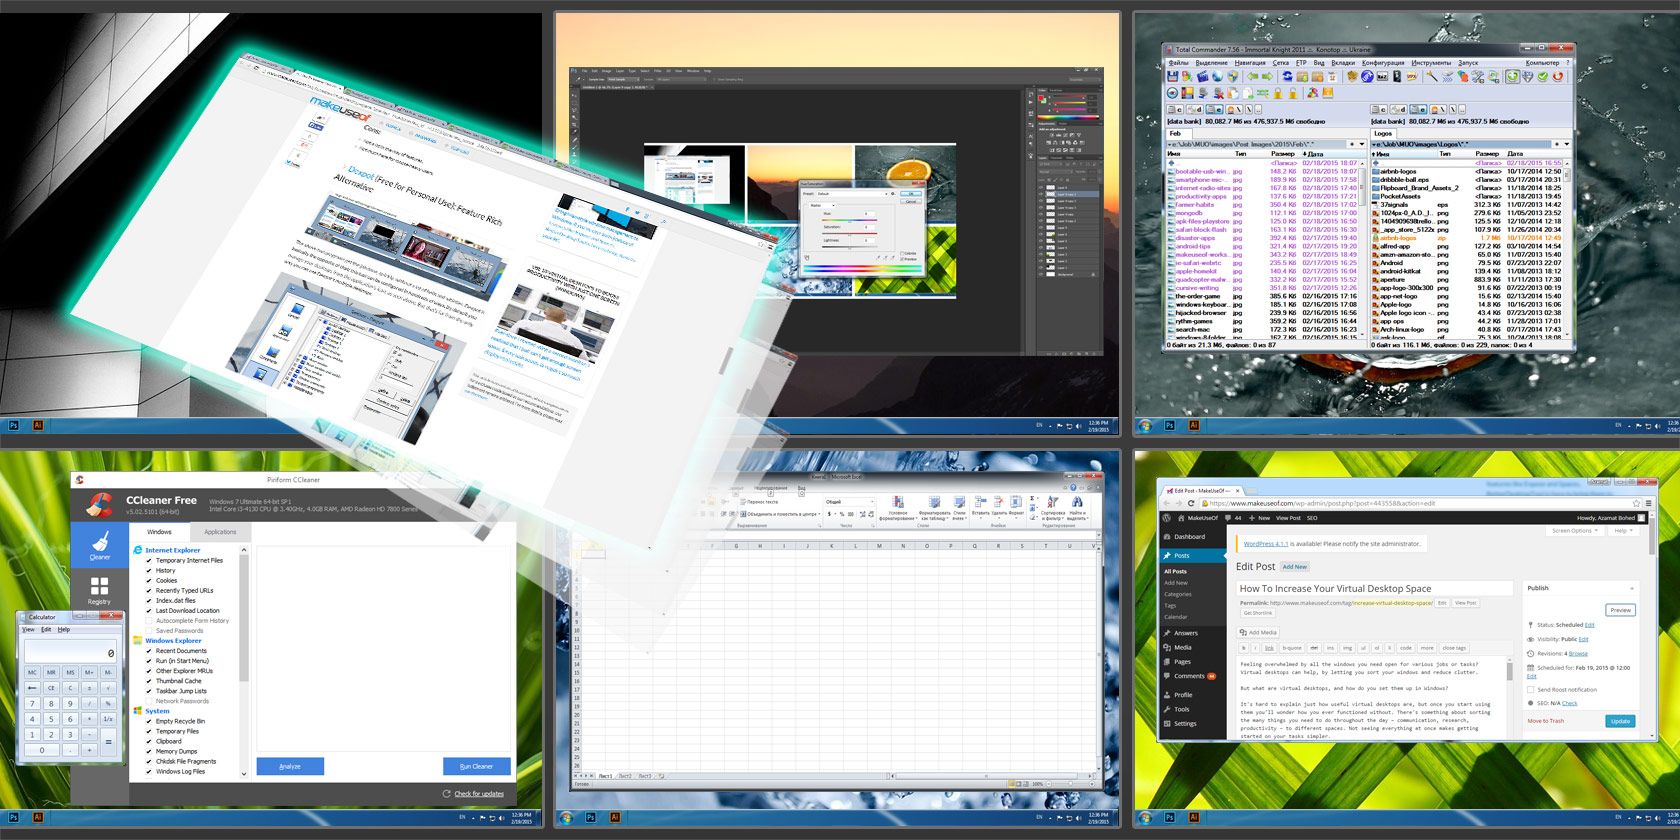 virtual-desktop-space